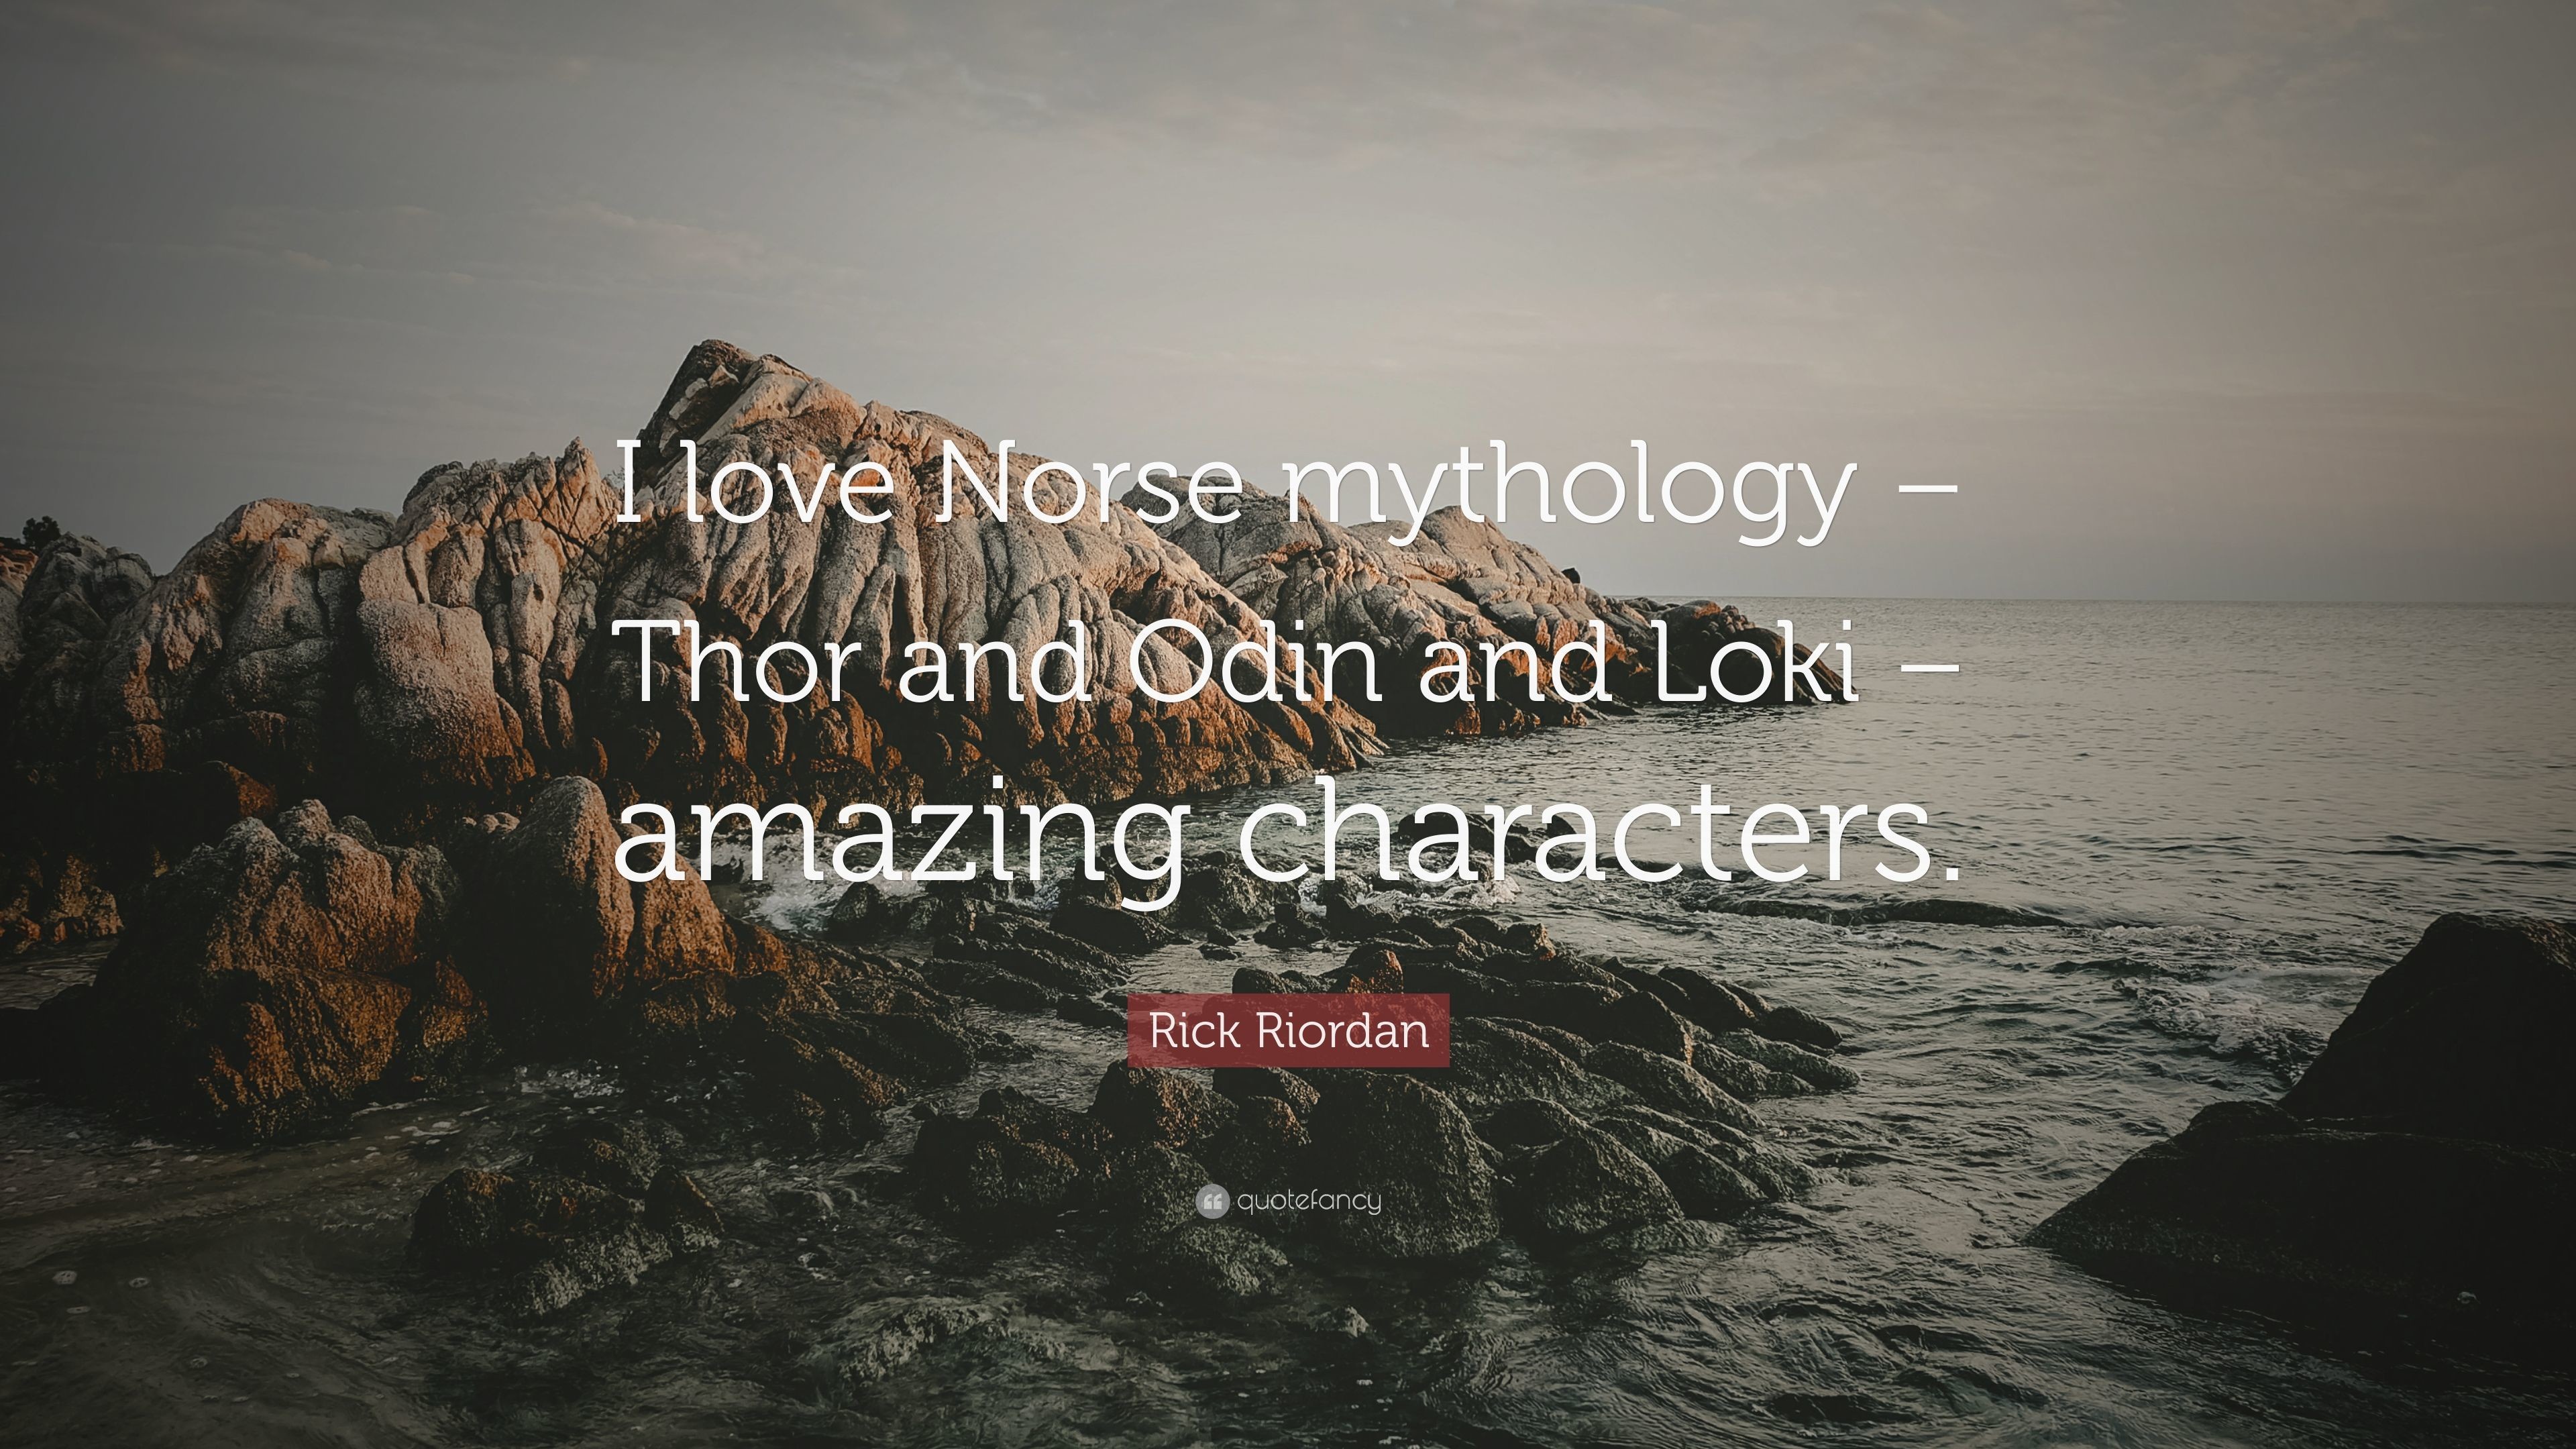 3840x2160 Rick Riordan Quote: “I love Norse mythology – Thor and Odin and Loki –